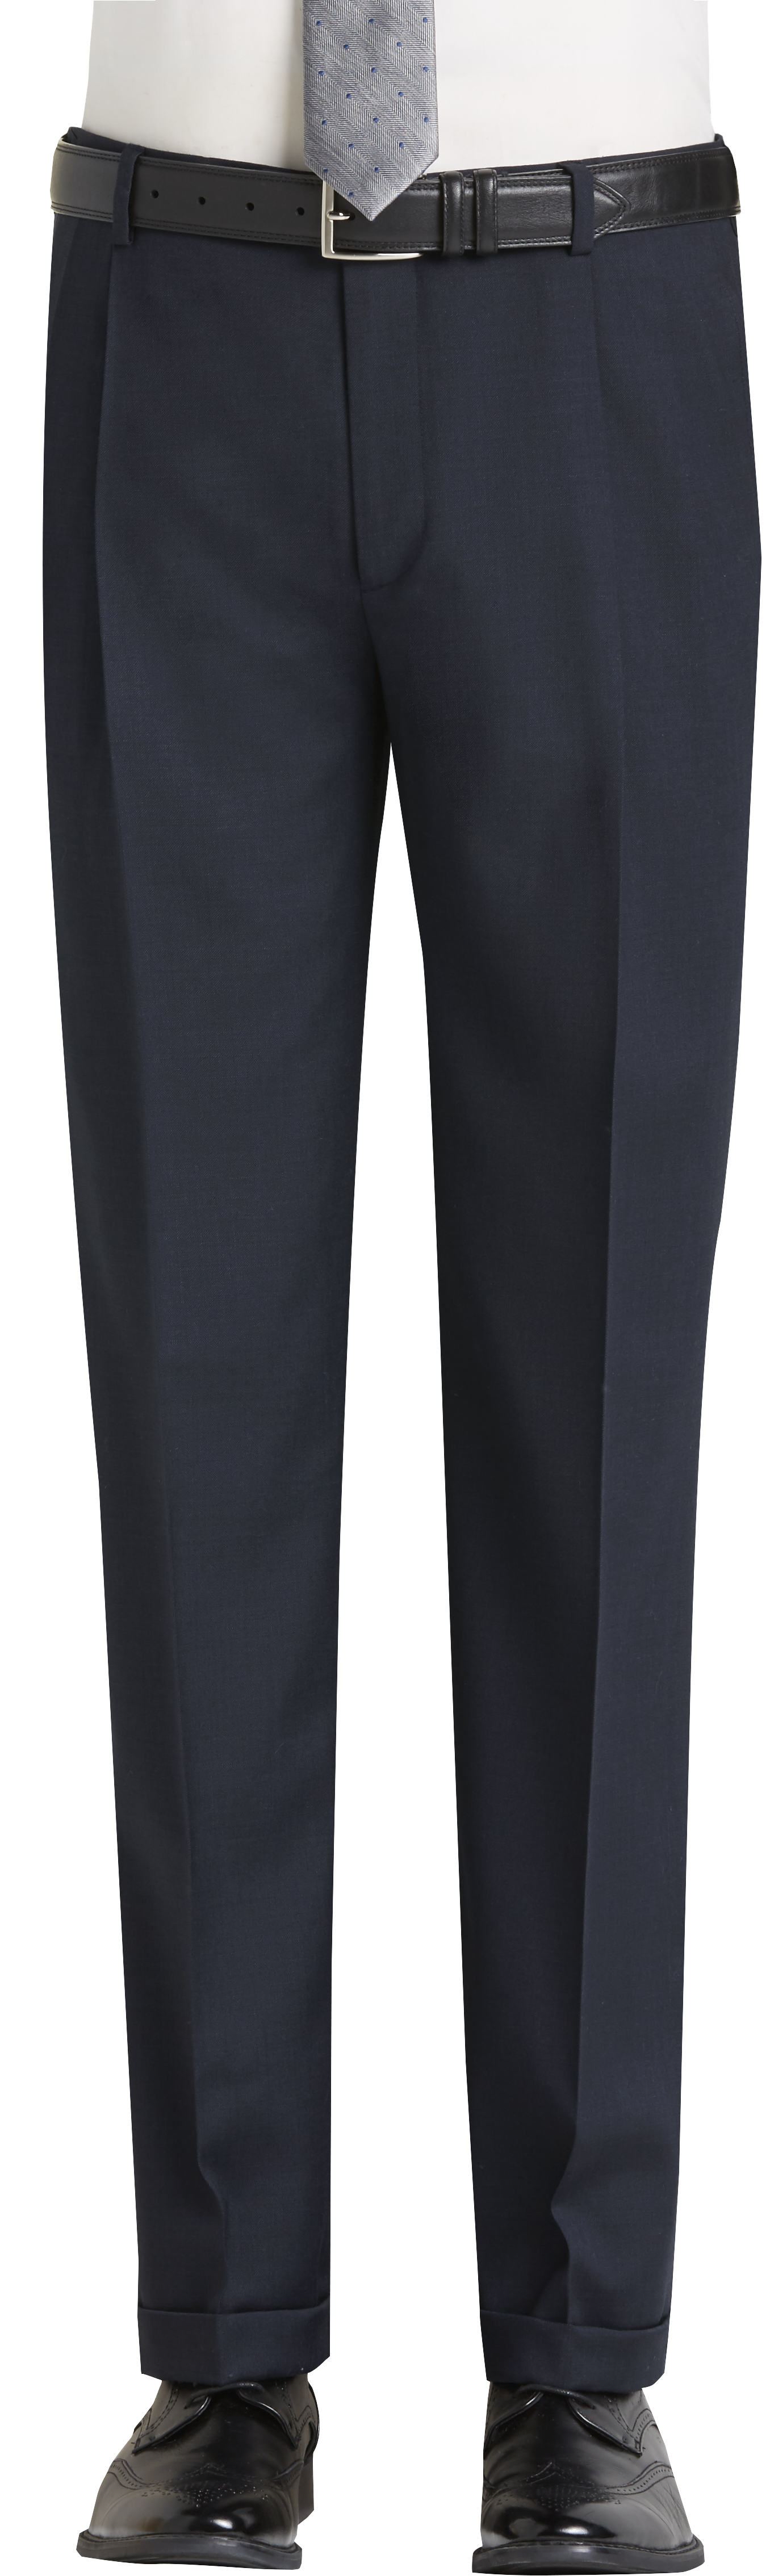 Pronto Uomo Platinum Suit Separates Modern Fit Pleated Slacks, Navy ...